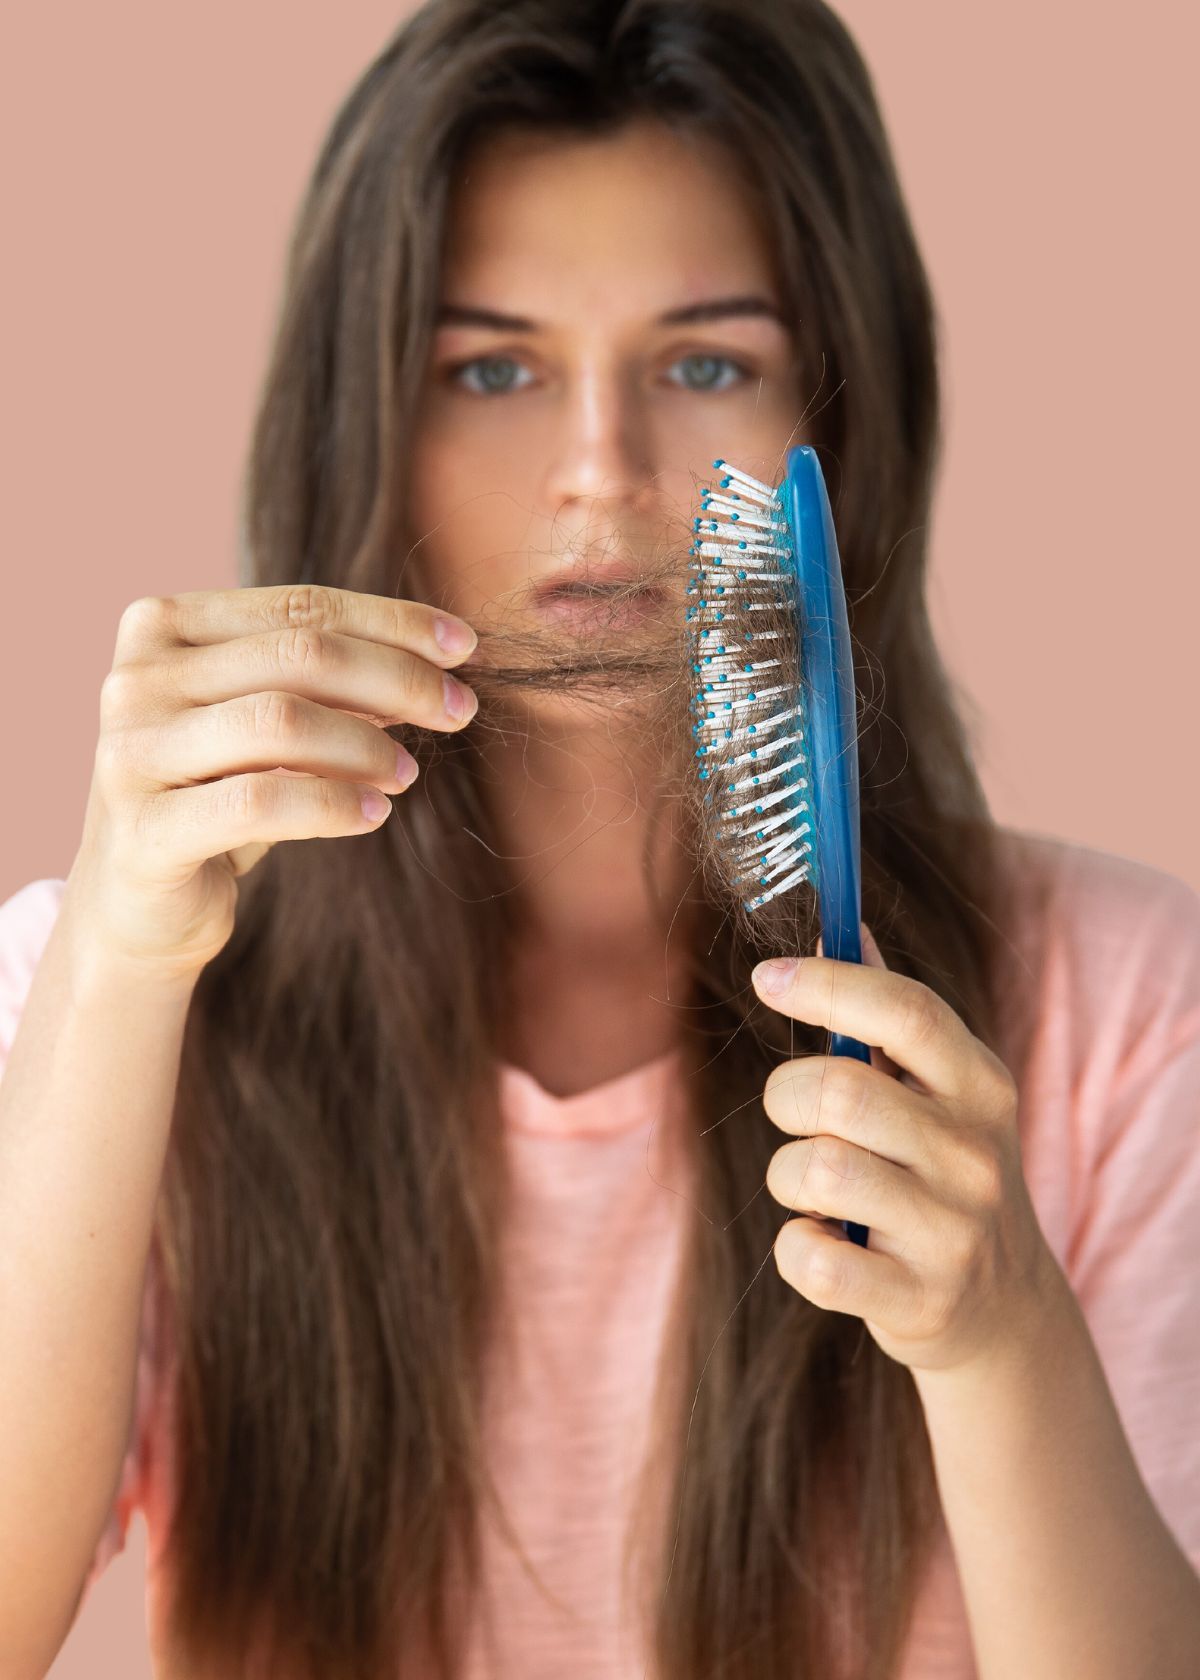 Can Clarifying Shampoo Cause Hair Loss?